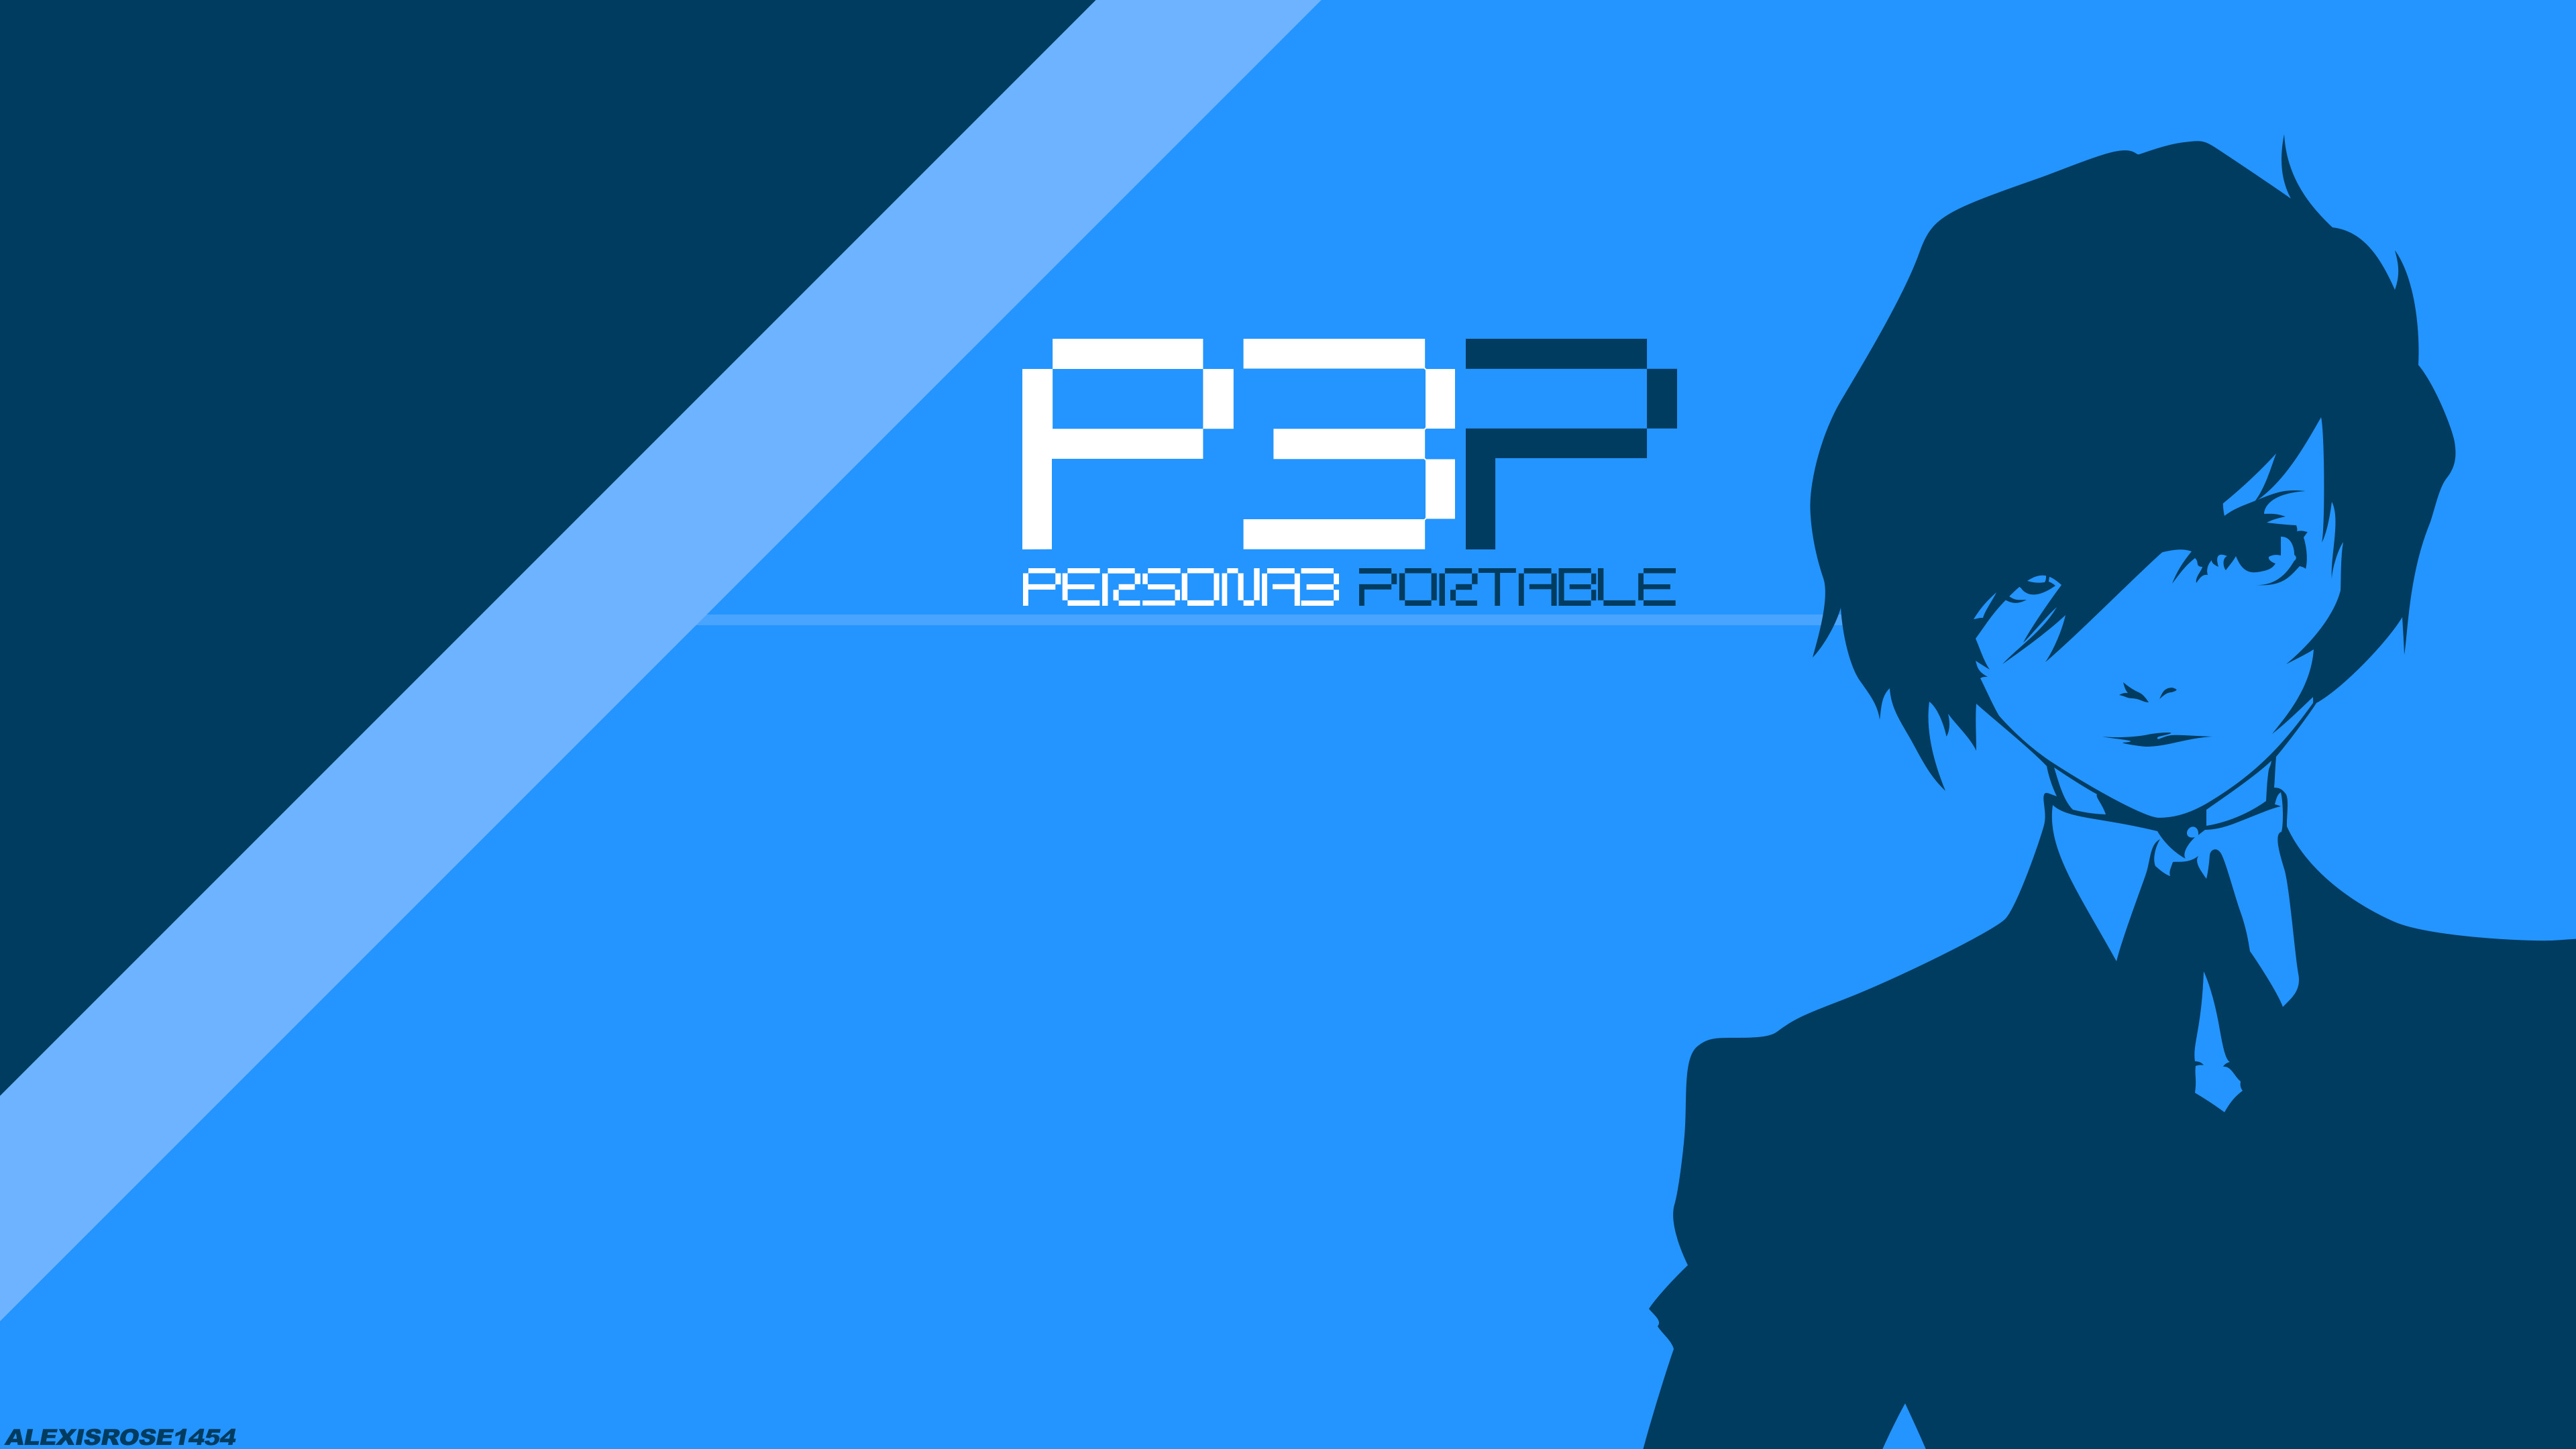 3840x2160 ... Persona 3 Portable - Maletag Wallpaper by alexisrose1454